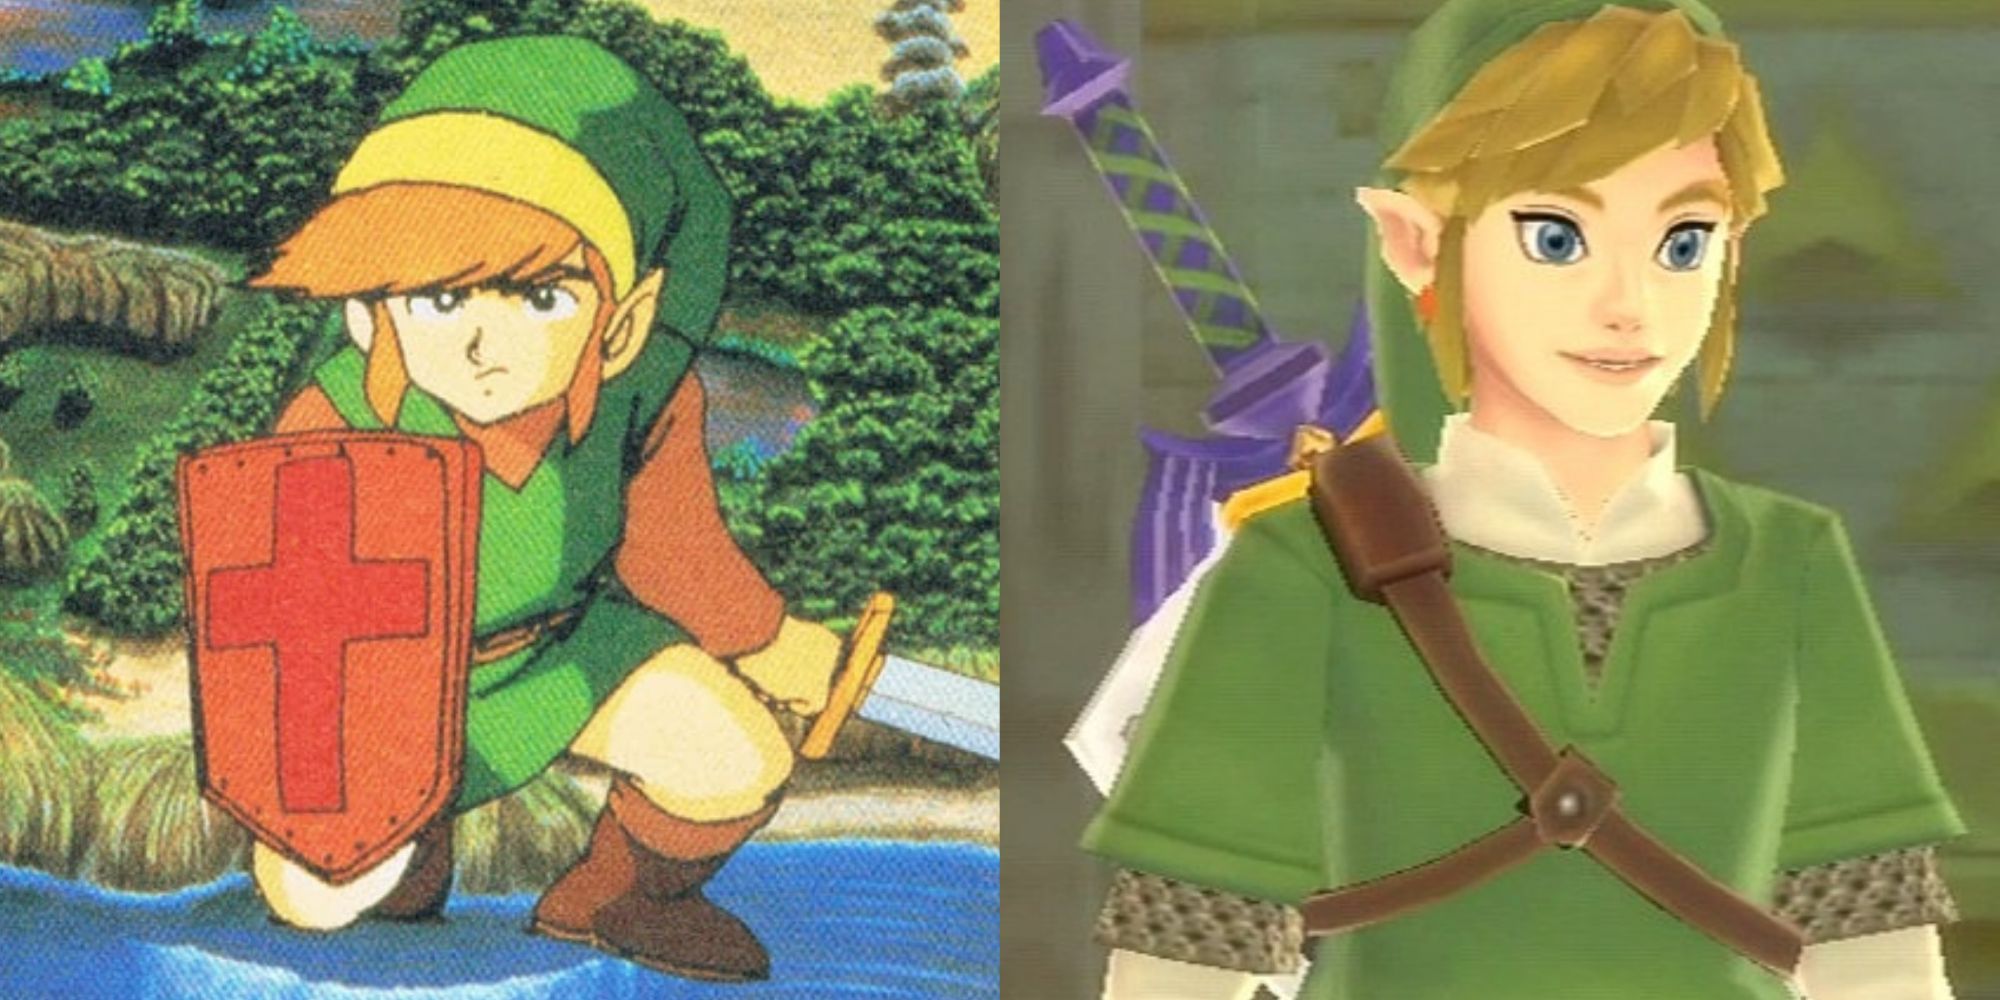 Split image screenshots of Link in the original The Legend of Zelda concept artwork and Link smiling in Skyward Sword.